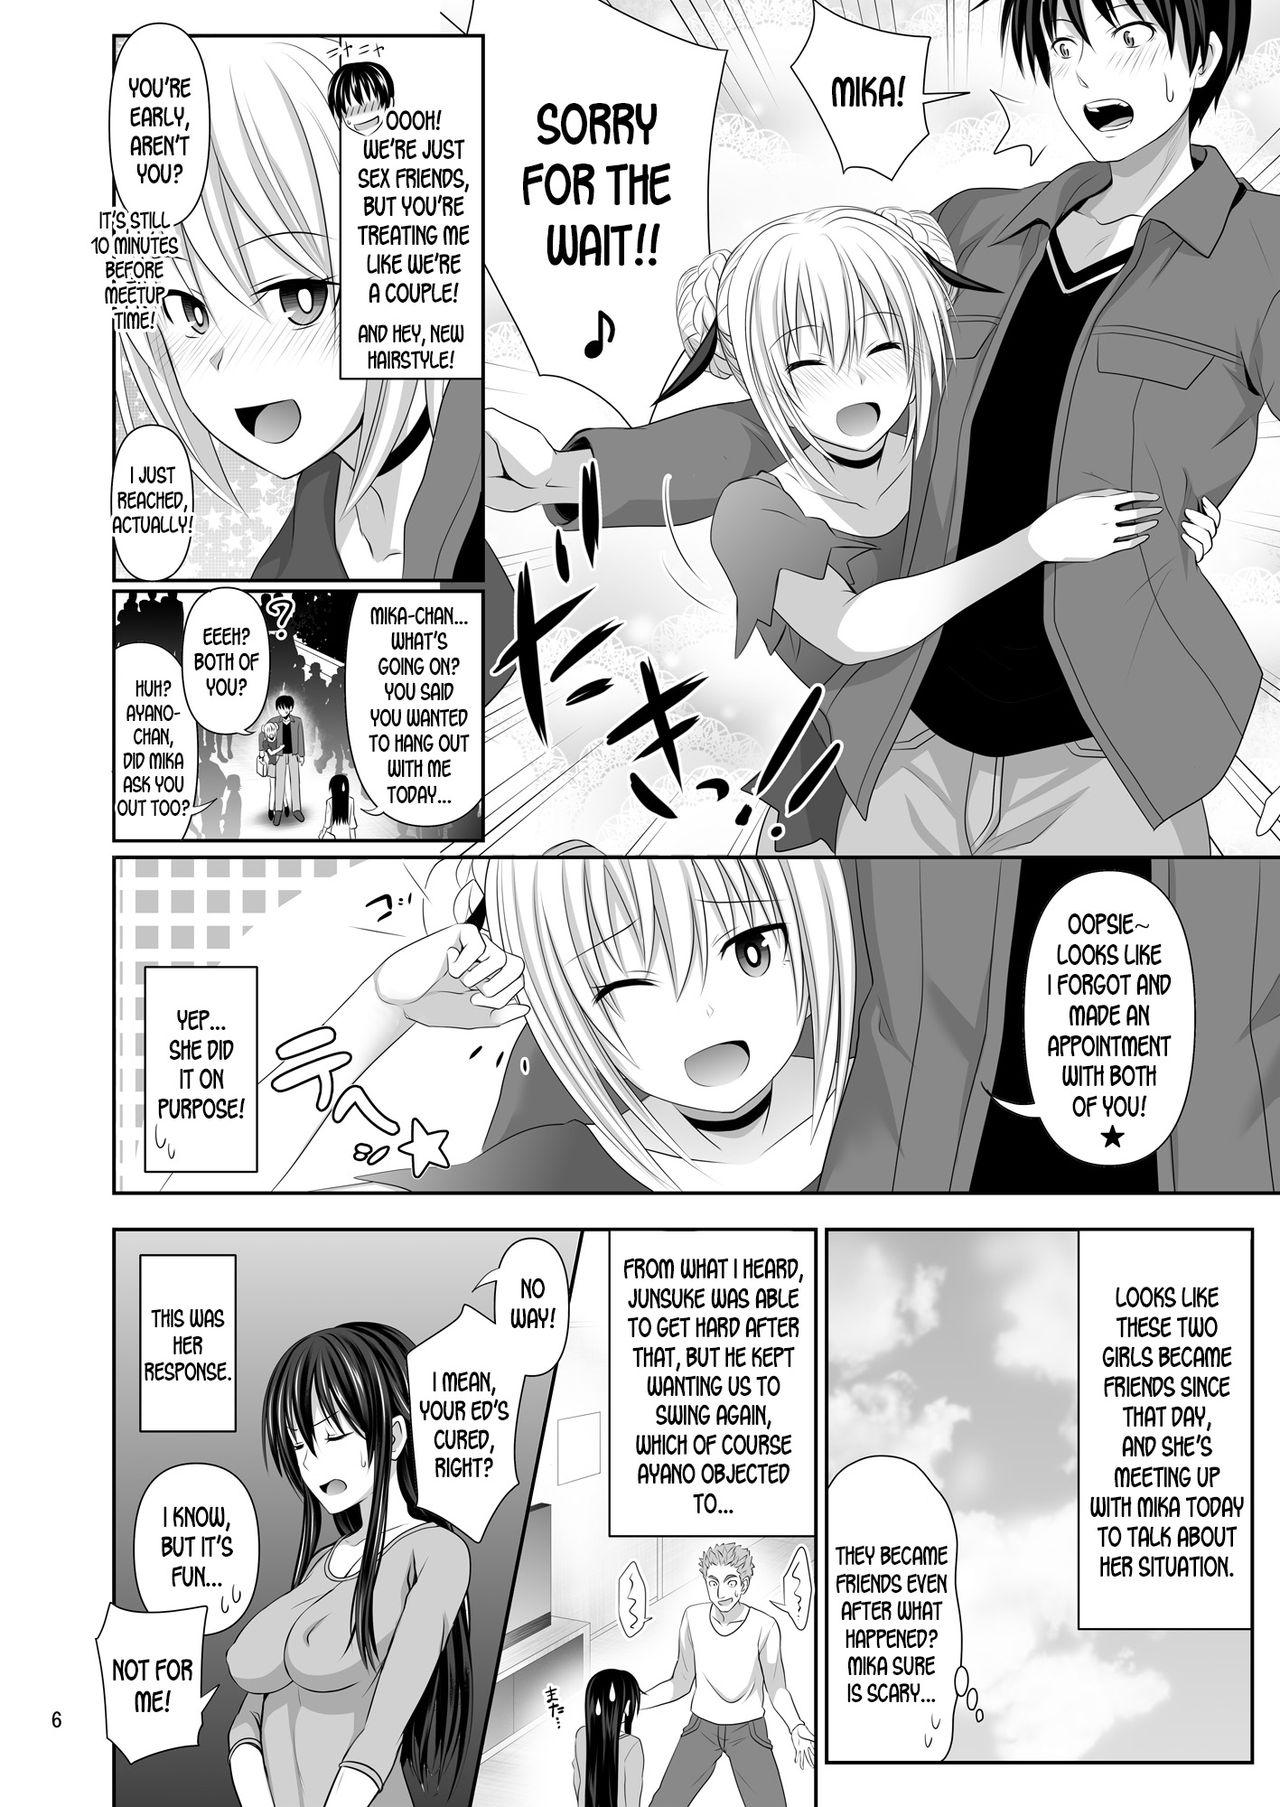 Amazing SEX FRIEND 2 - Original Married - Page 6